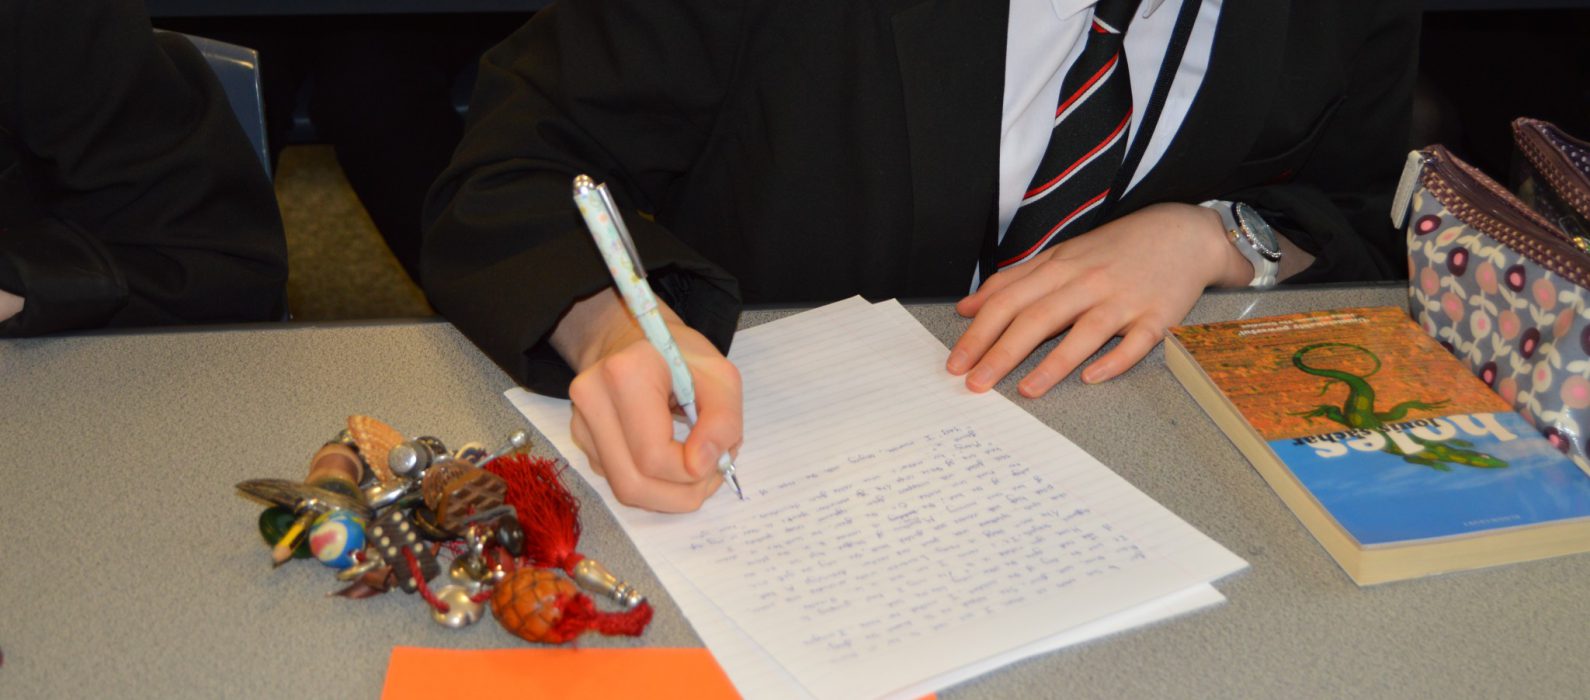 Student doing creative writing